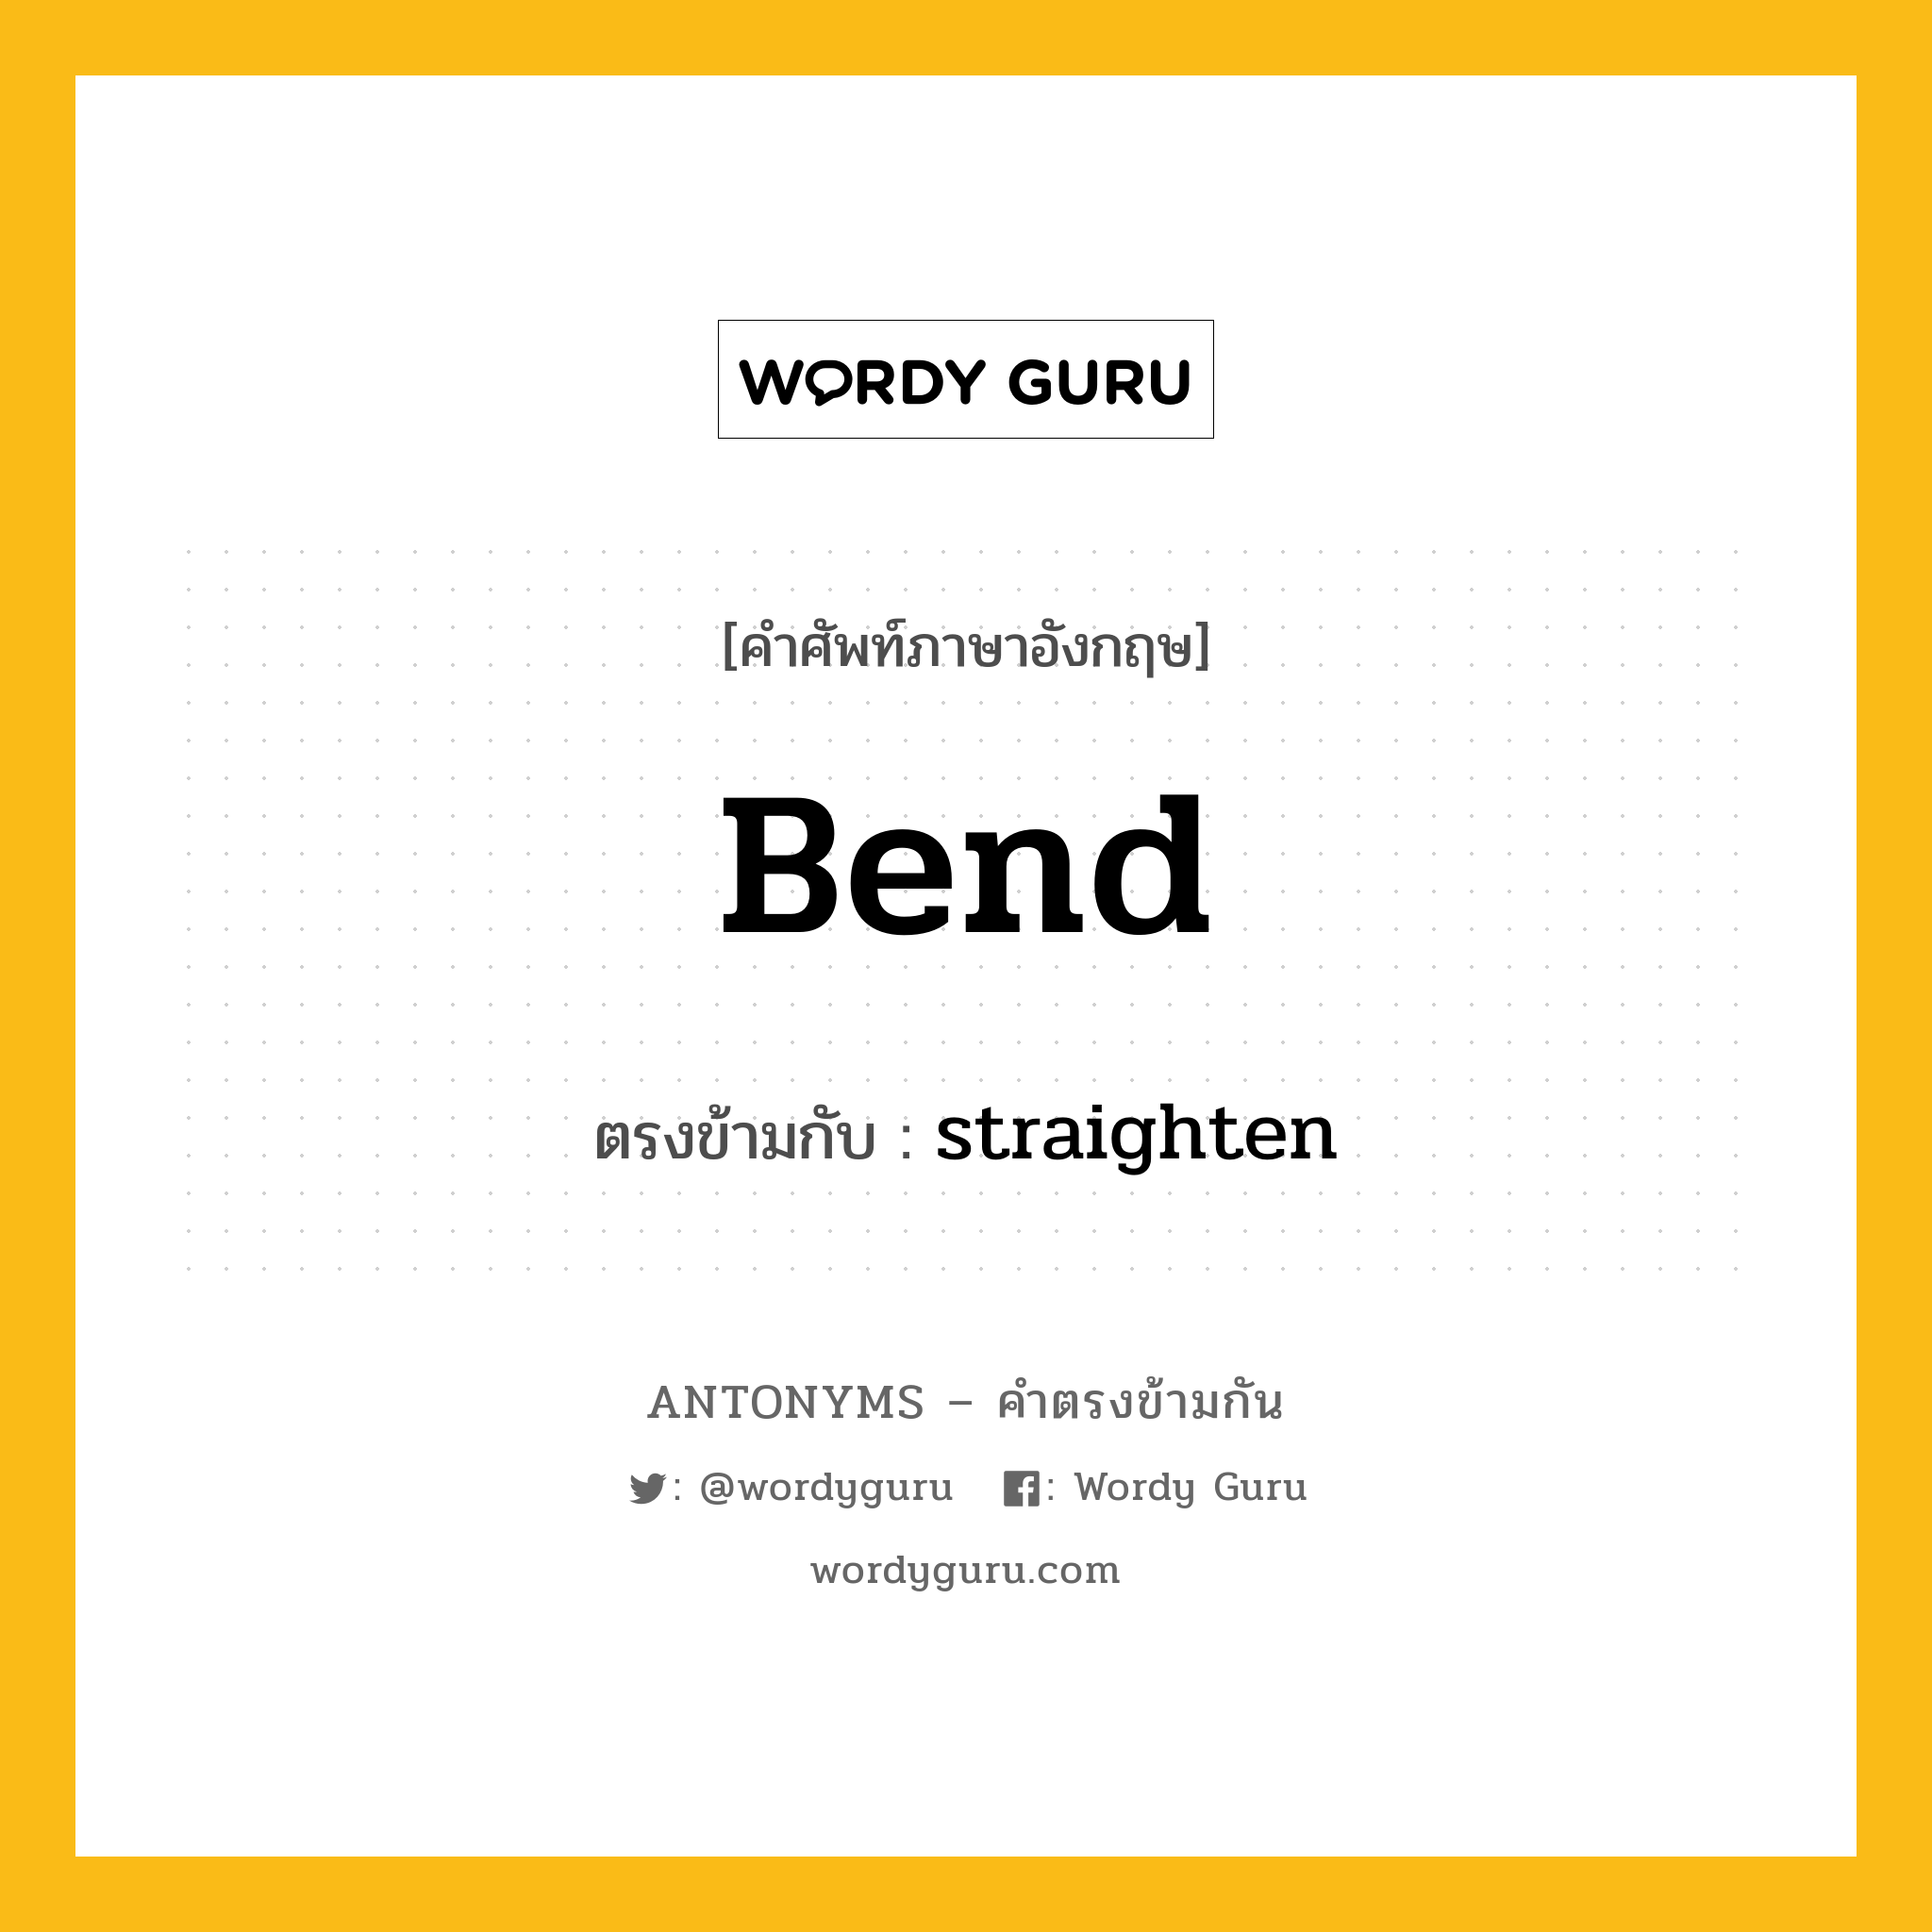 bend เป็นคำตรงข้ามกับคำไหนบ้าง?, คำศัพท์ภาษาอังกฤษ bend ตรงข้ามกับ straighten หมวด straighten